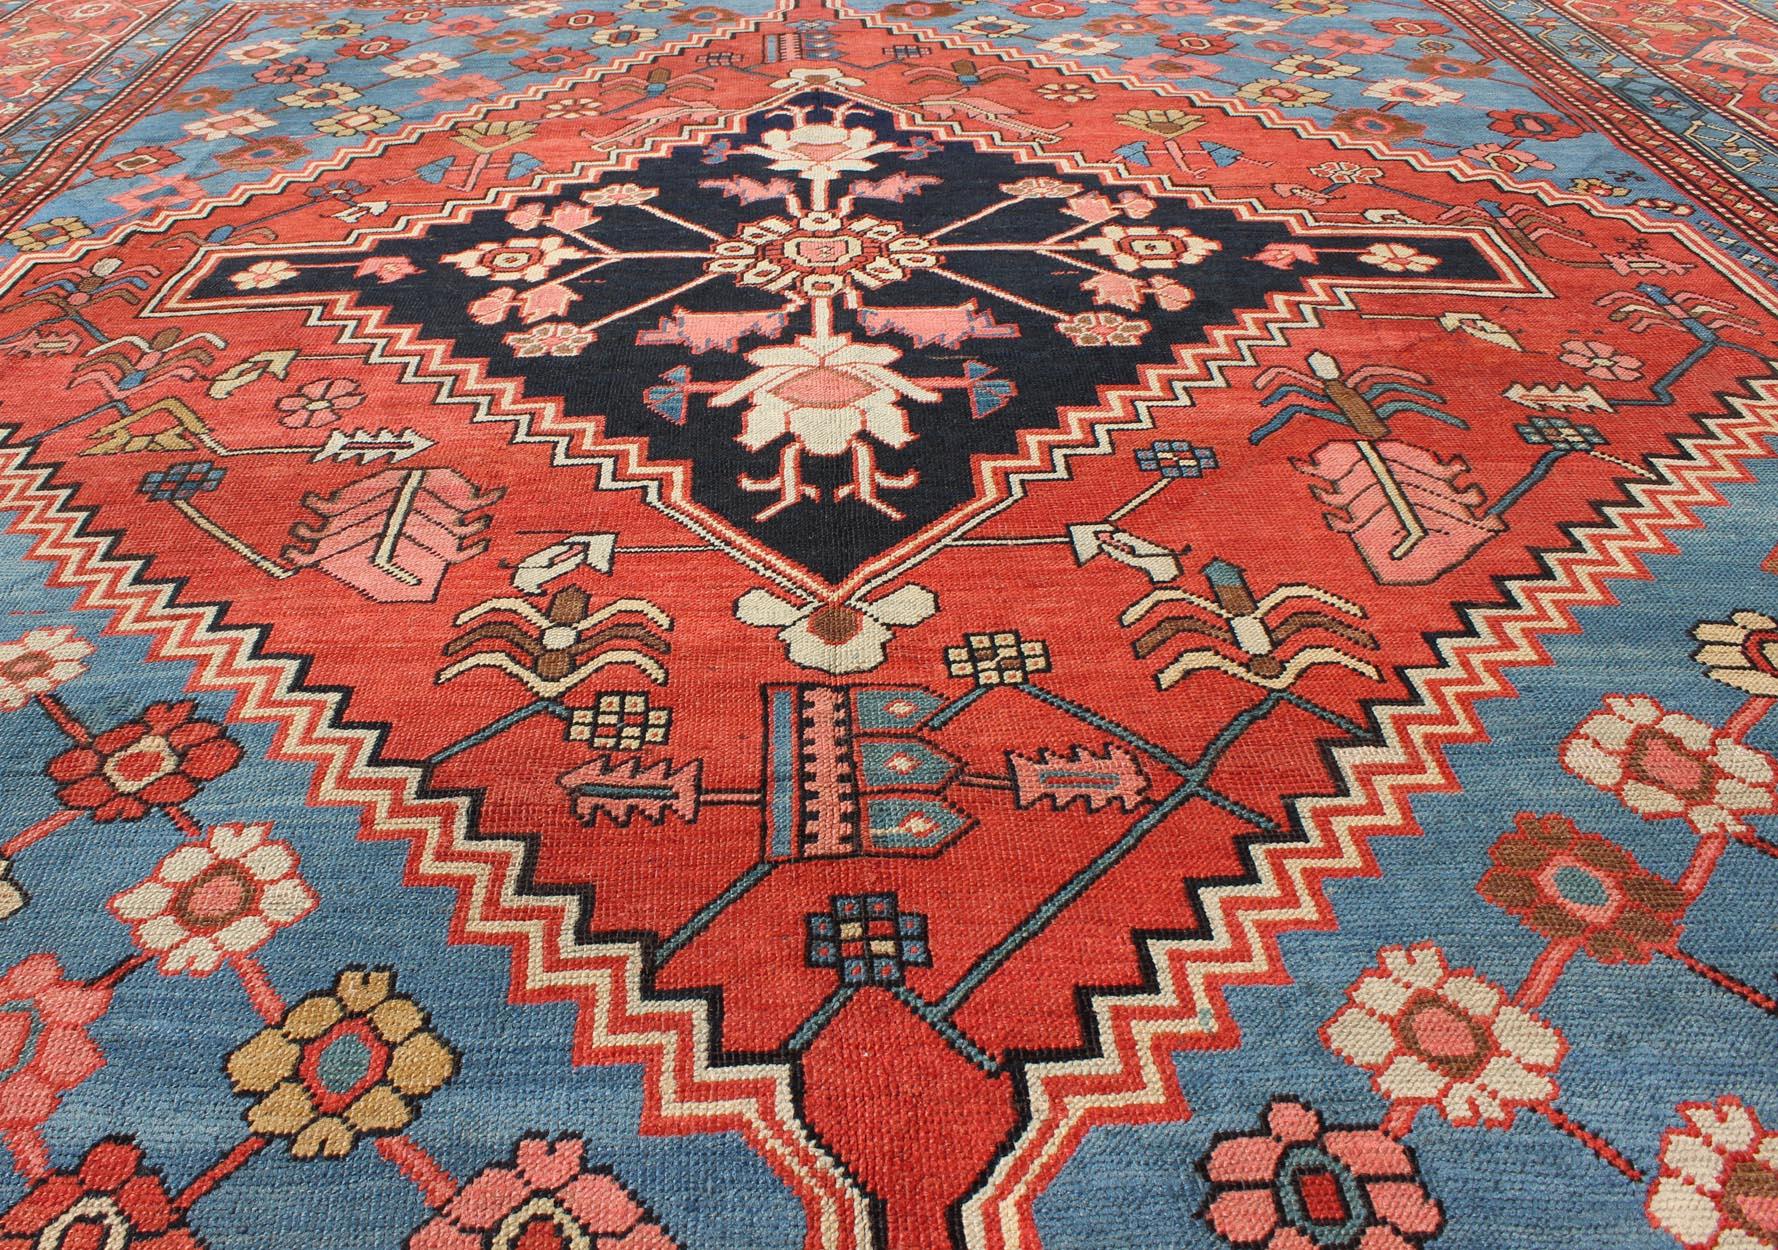 Antique Persian Bakhshaish Carpet with a Unique Geometric Medallion and Design For Sale 2